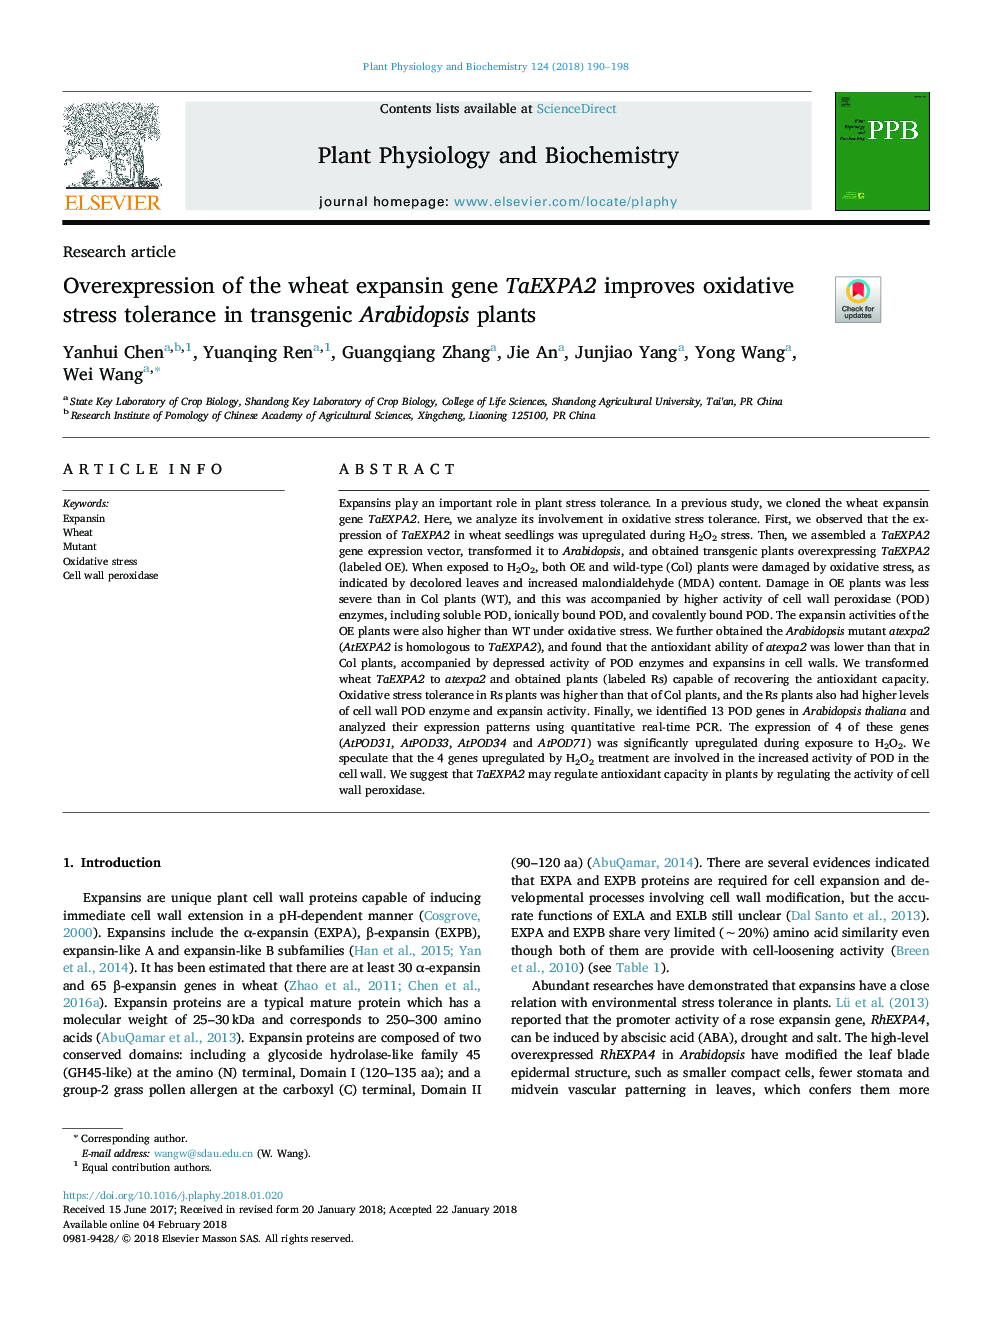 Overexpression of the wheat expansin gene TaEXPA2 improves oxidative stress tolerance in transgenic Arabidopsis plants